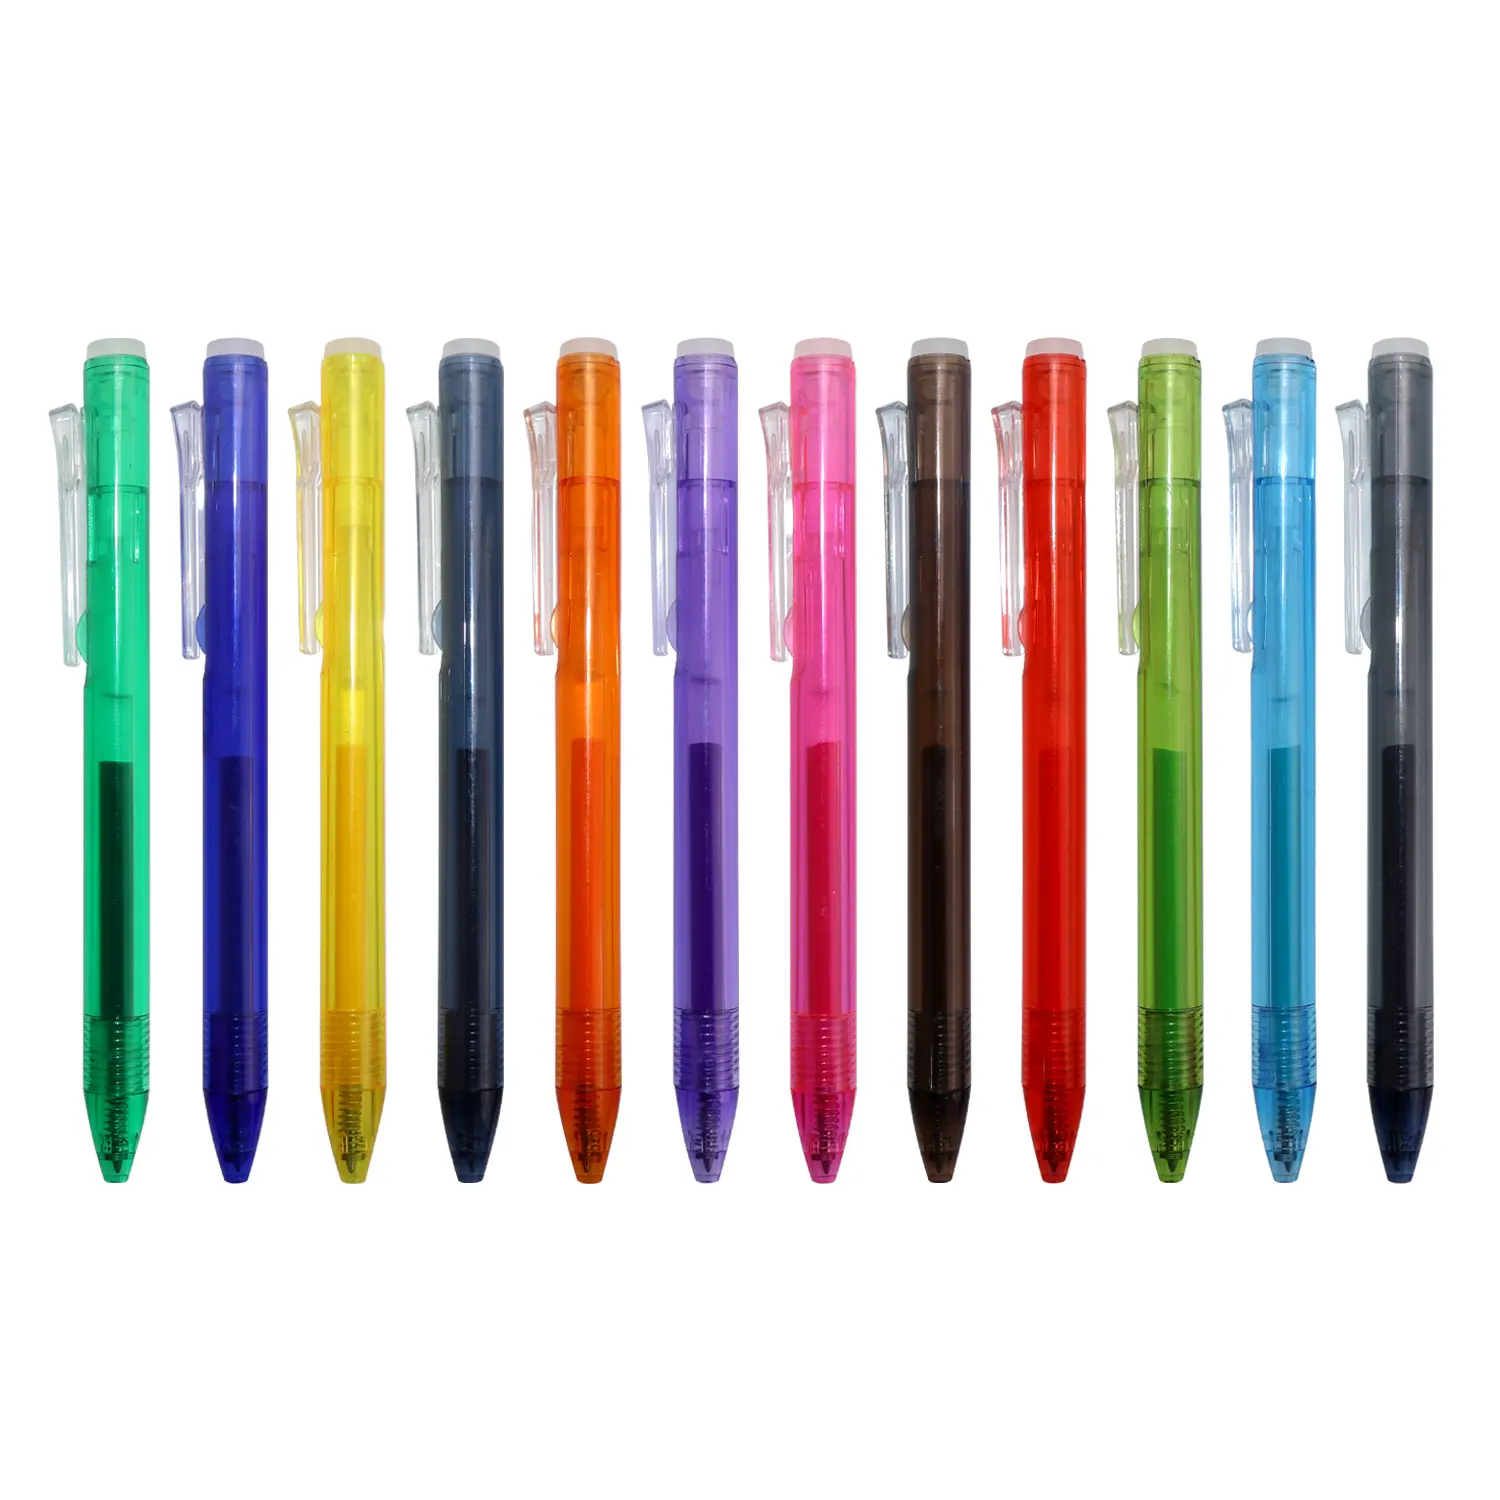 ANI Low price guaranteed quality 0.5mm ball ink erasable gel pen